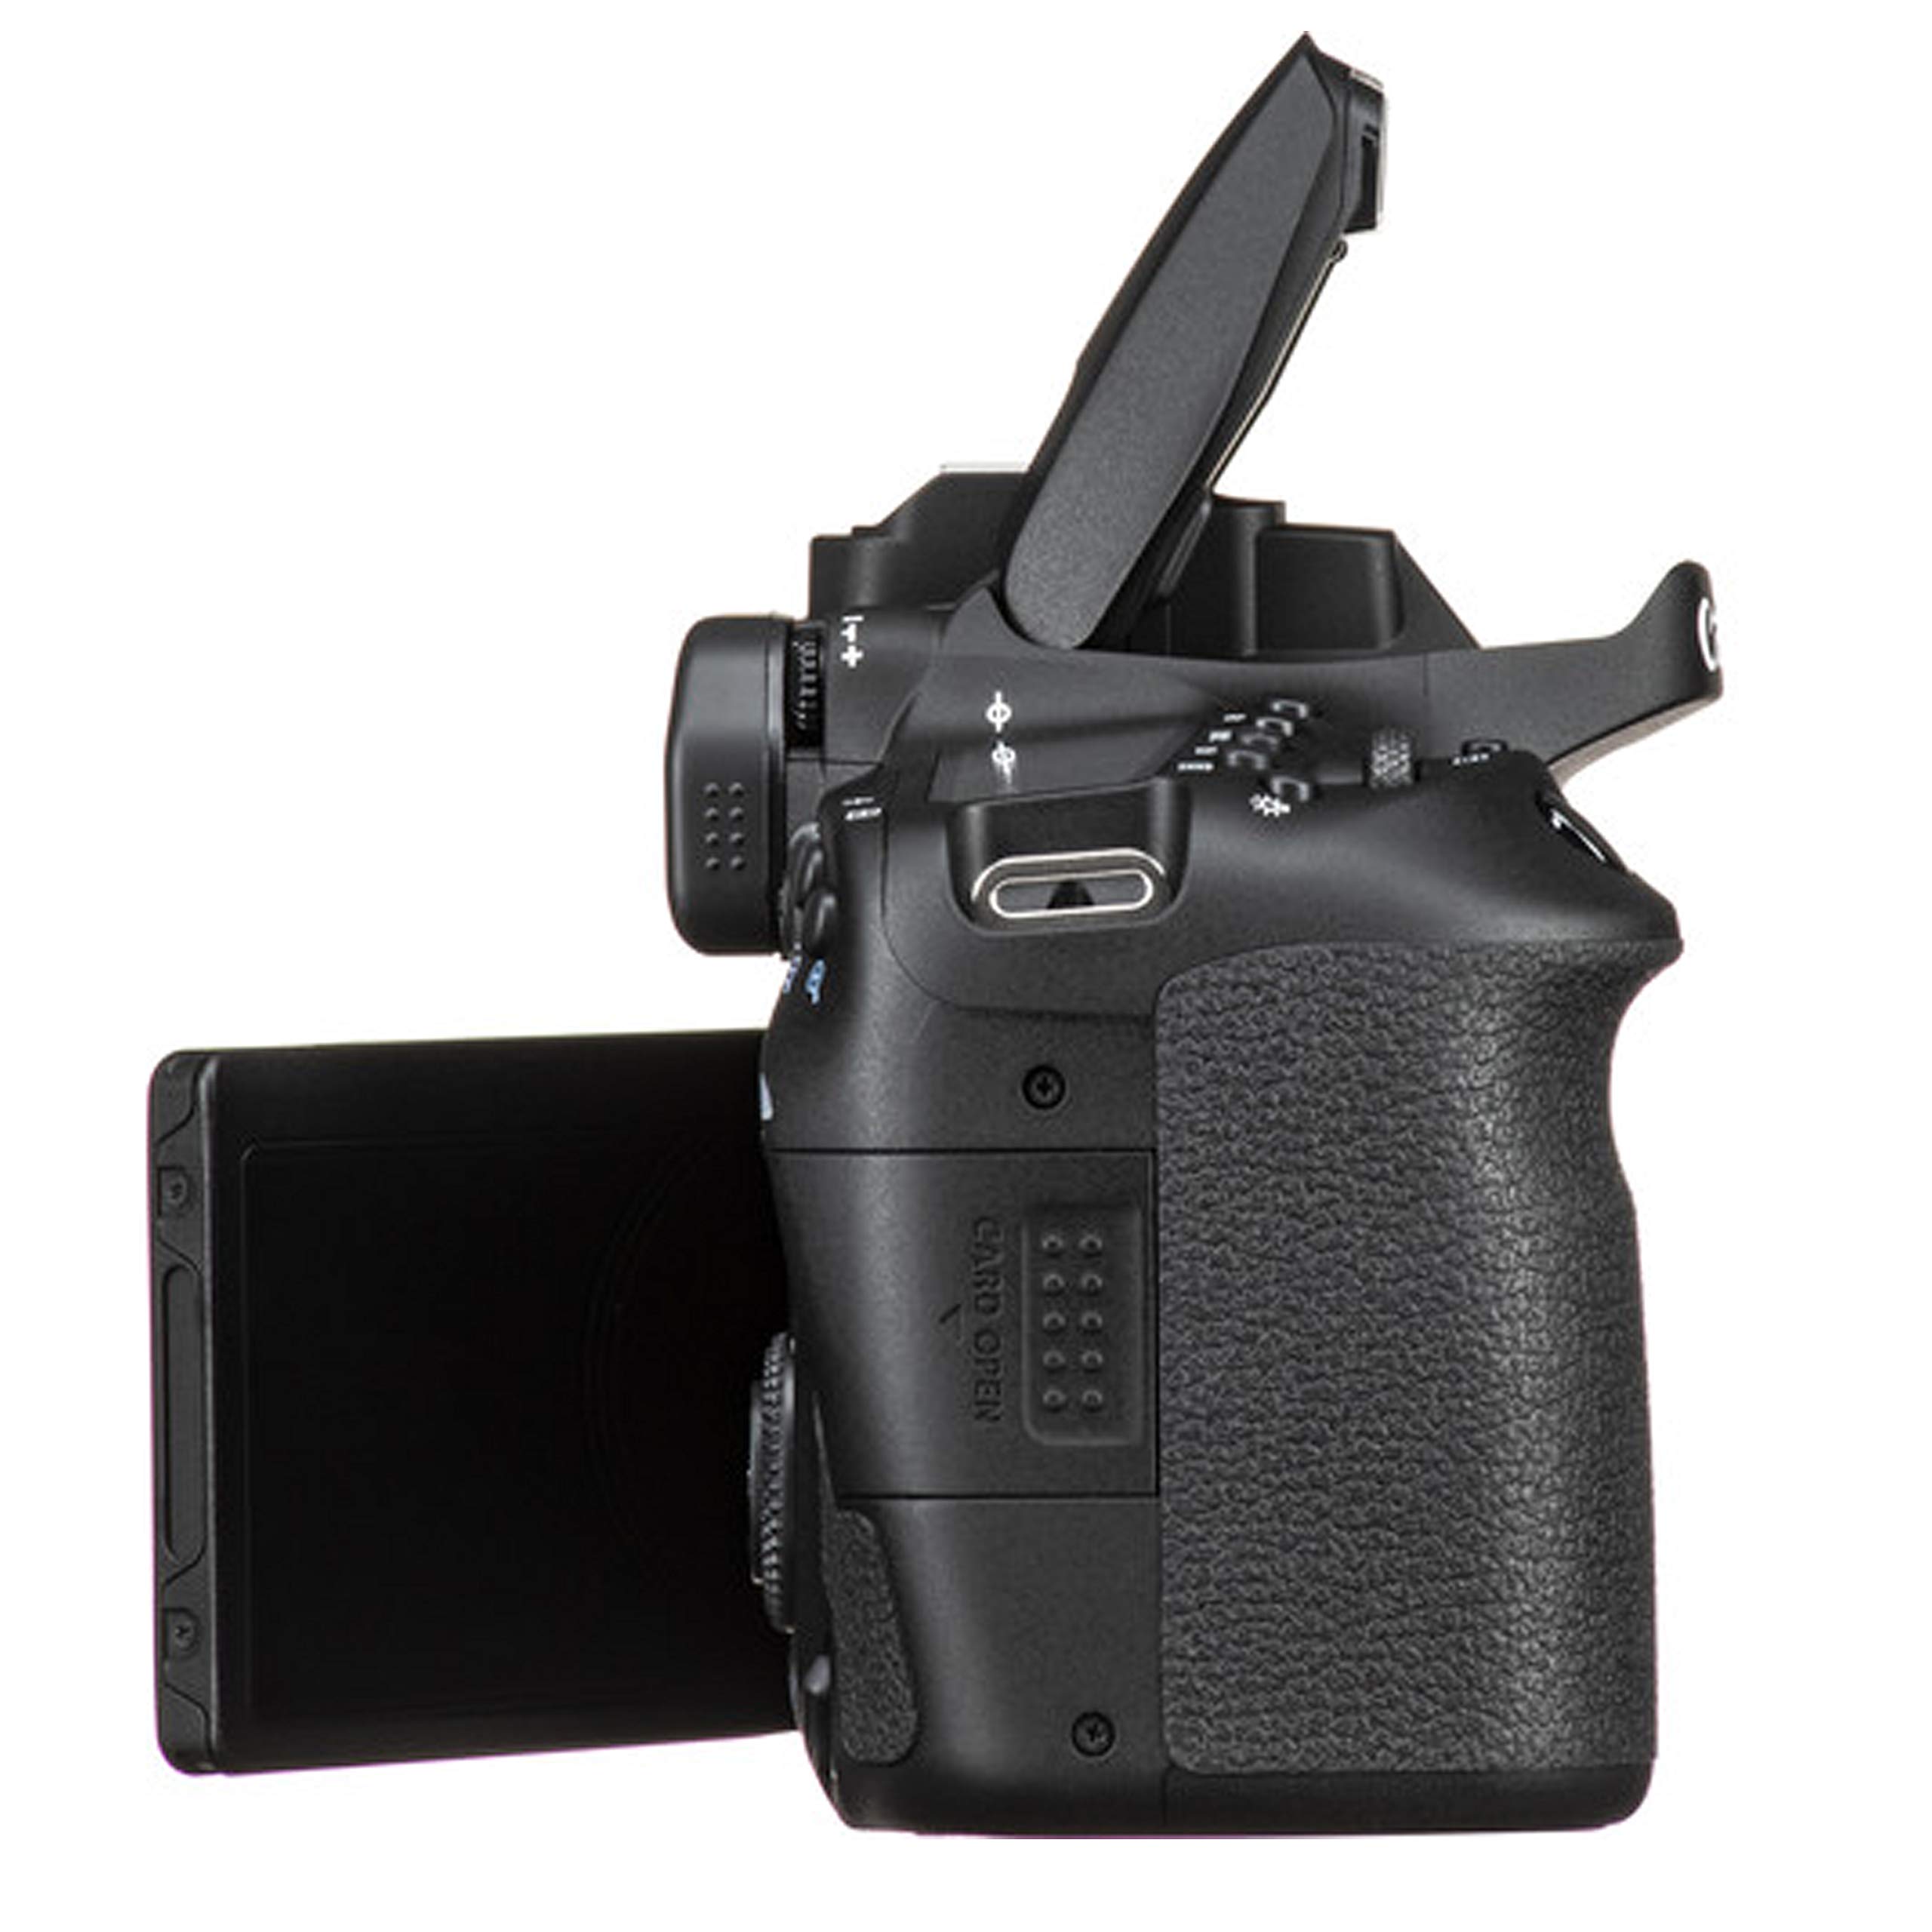 Canon EOS 90D DSLR Camera w/EF-S 18-135mm f/3.5-5.6 is USM Zoom Lens + 55-250mm f/4-5.6 is STM Lens + 420-800mm Super Telephoto Lens + 64GB Memory Cards, Professional Photo Bundle (44pc Bundle)